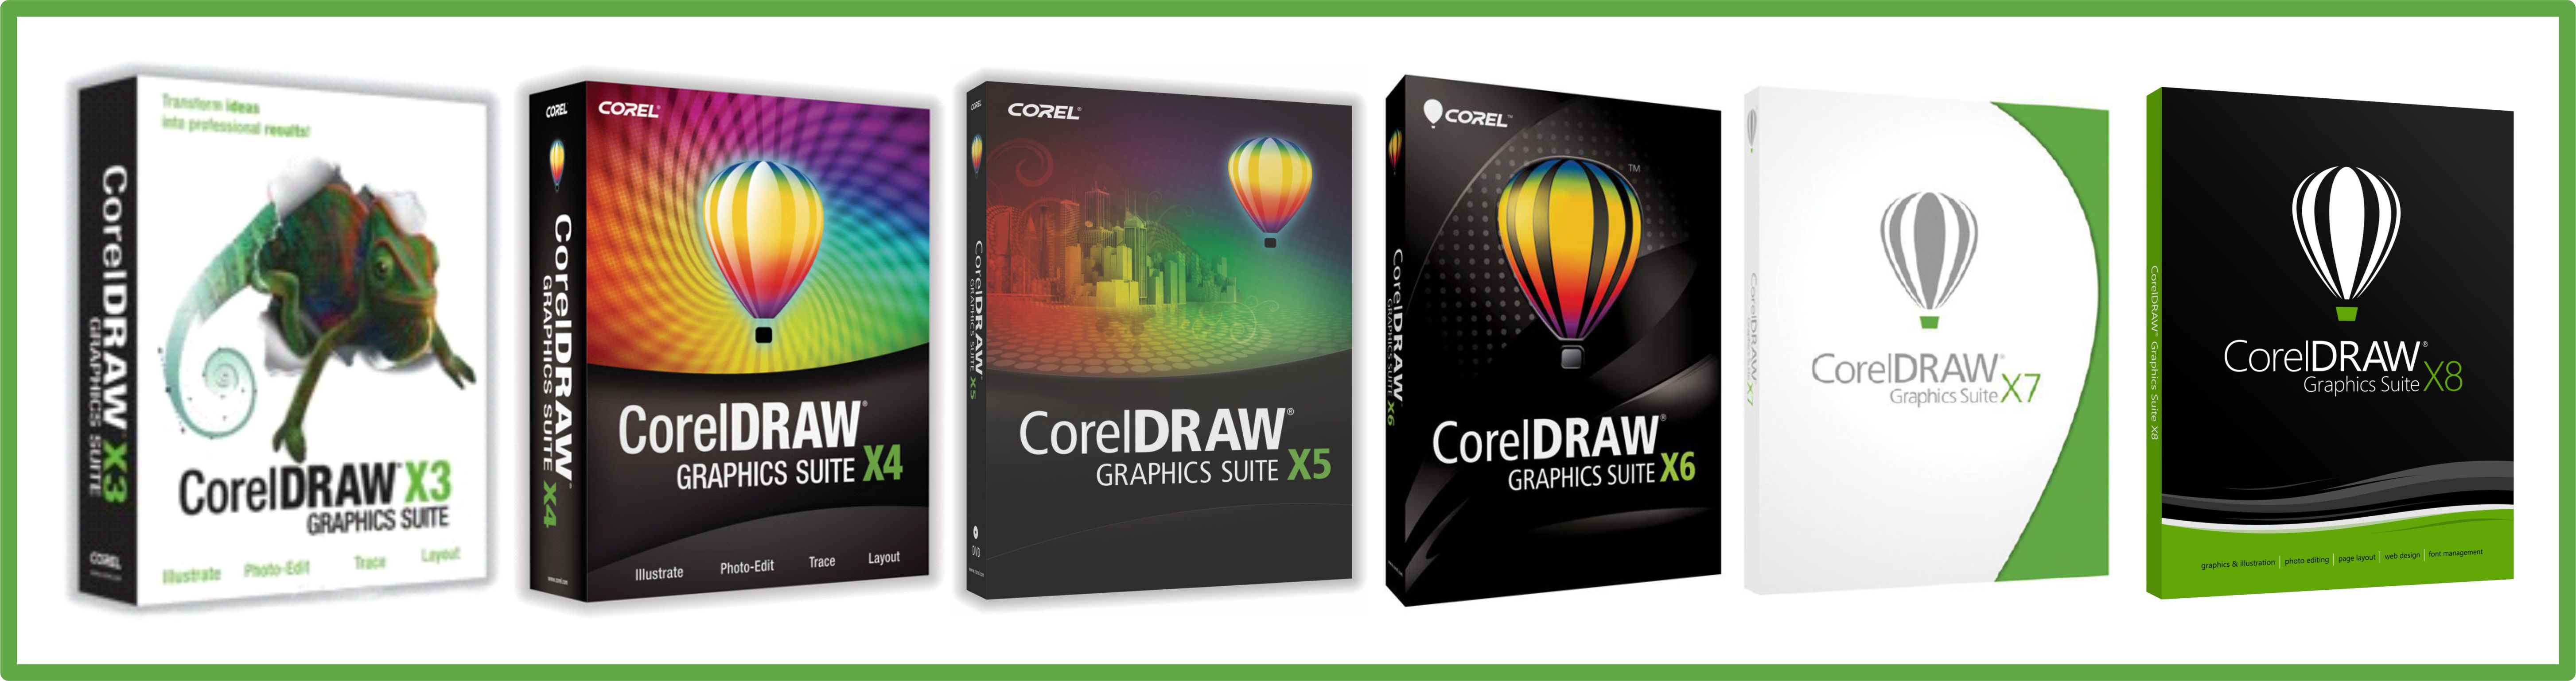 Corel draw 10 download pl